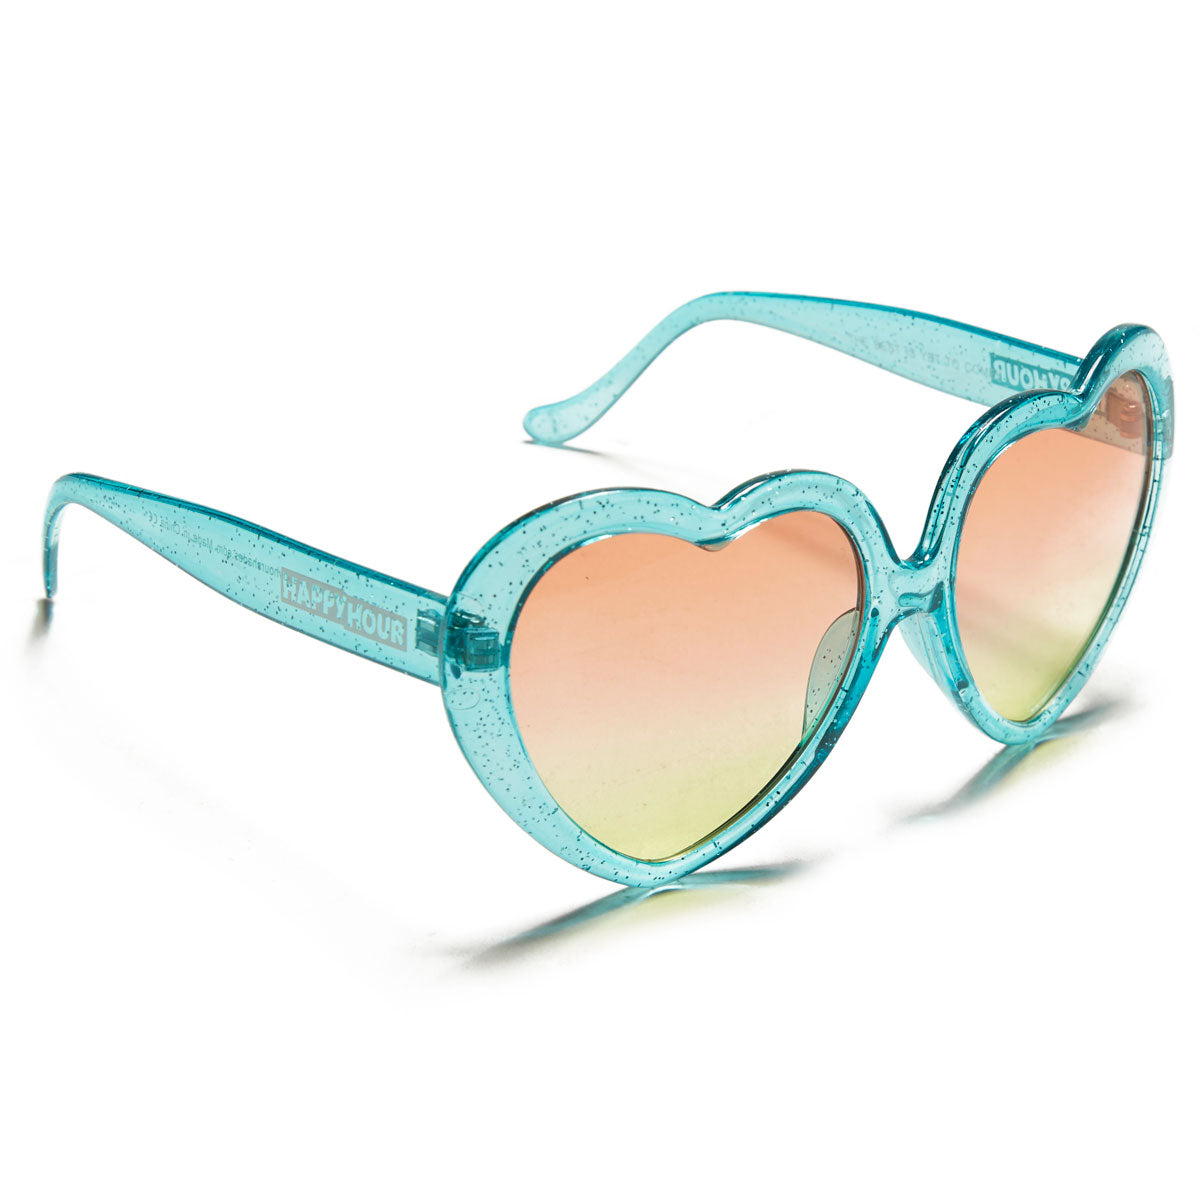 Happy Hour Heart On Sunglasses - Blue Sparkle/Mai Tai image 1